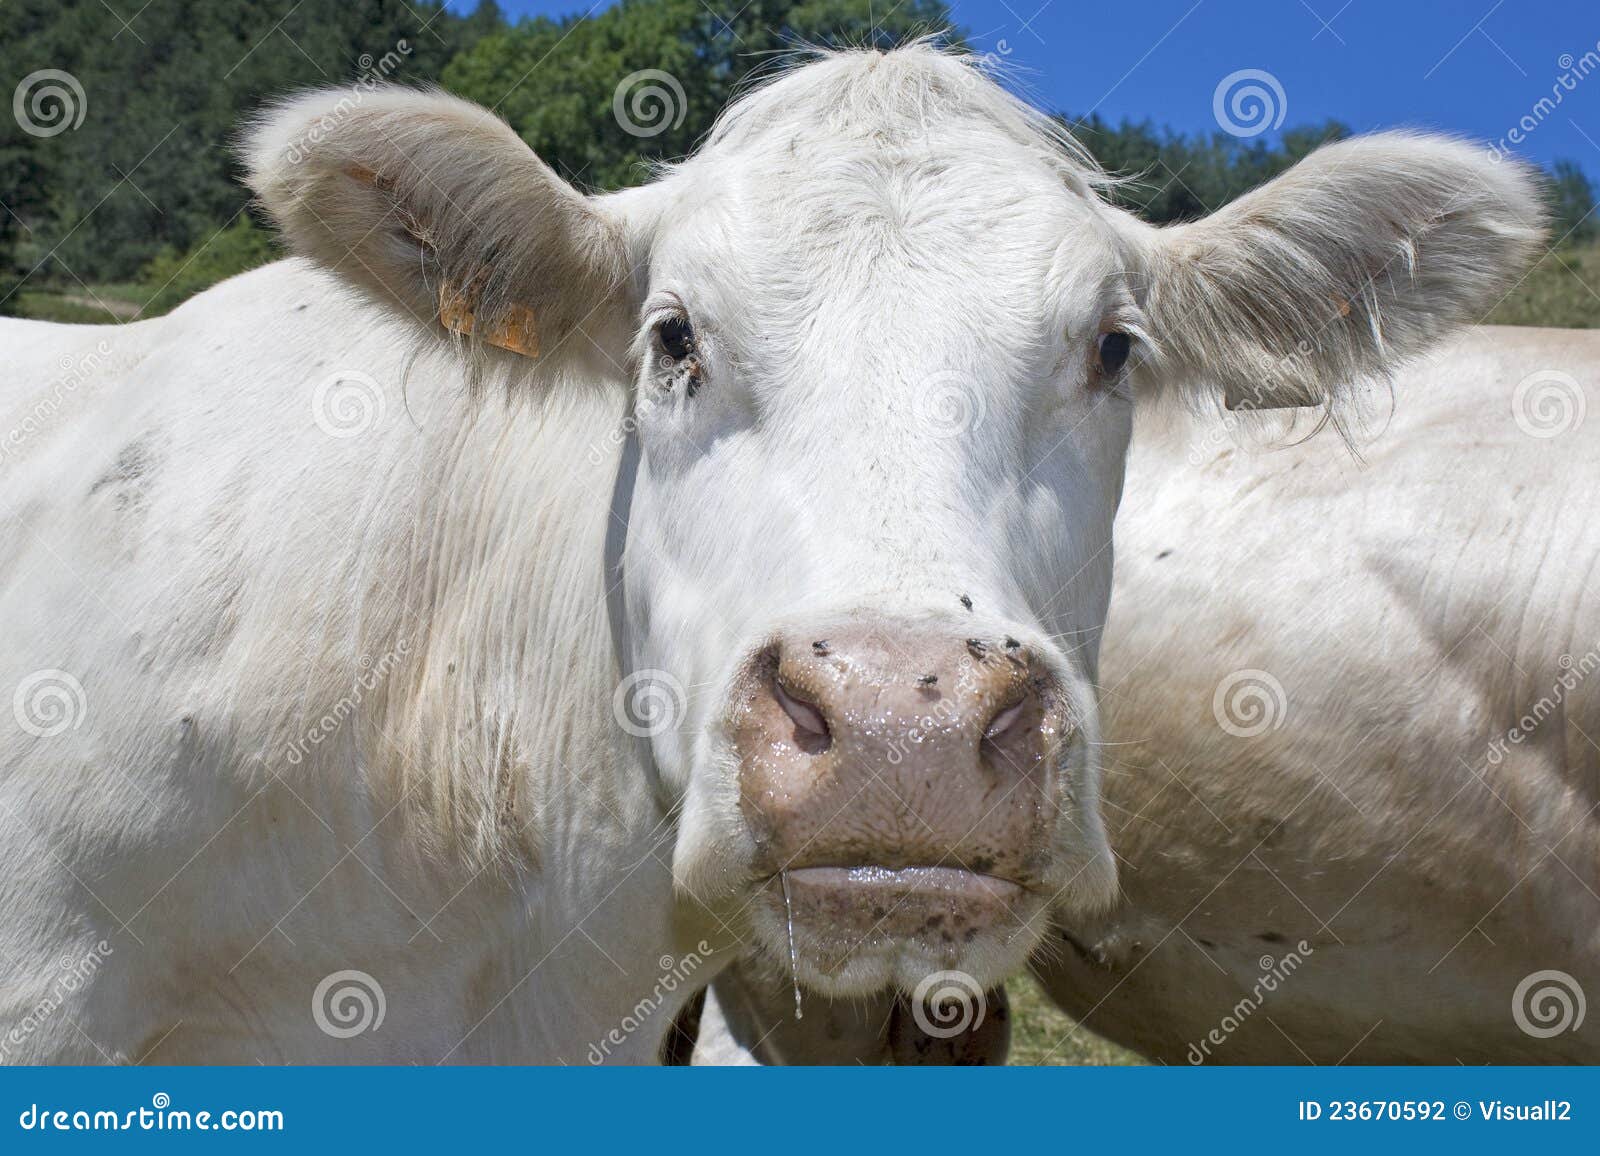 cow,cattle, livestock.